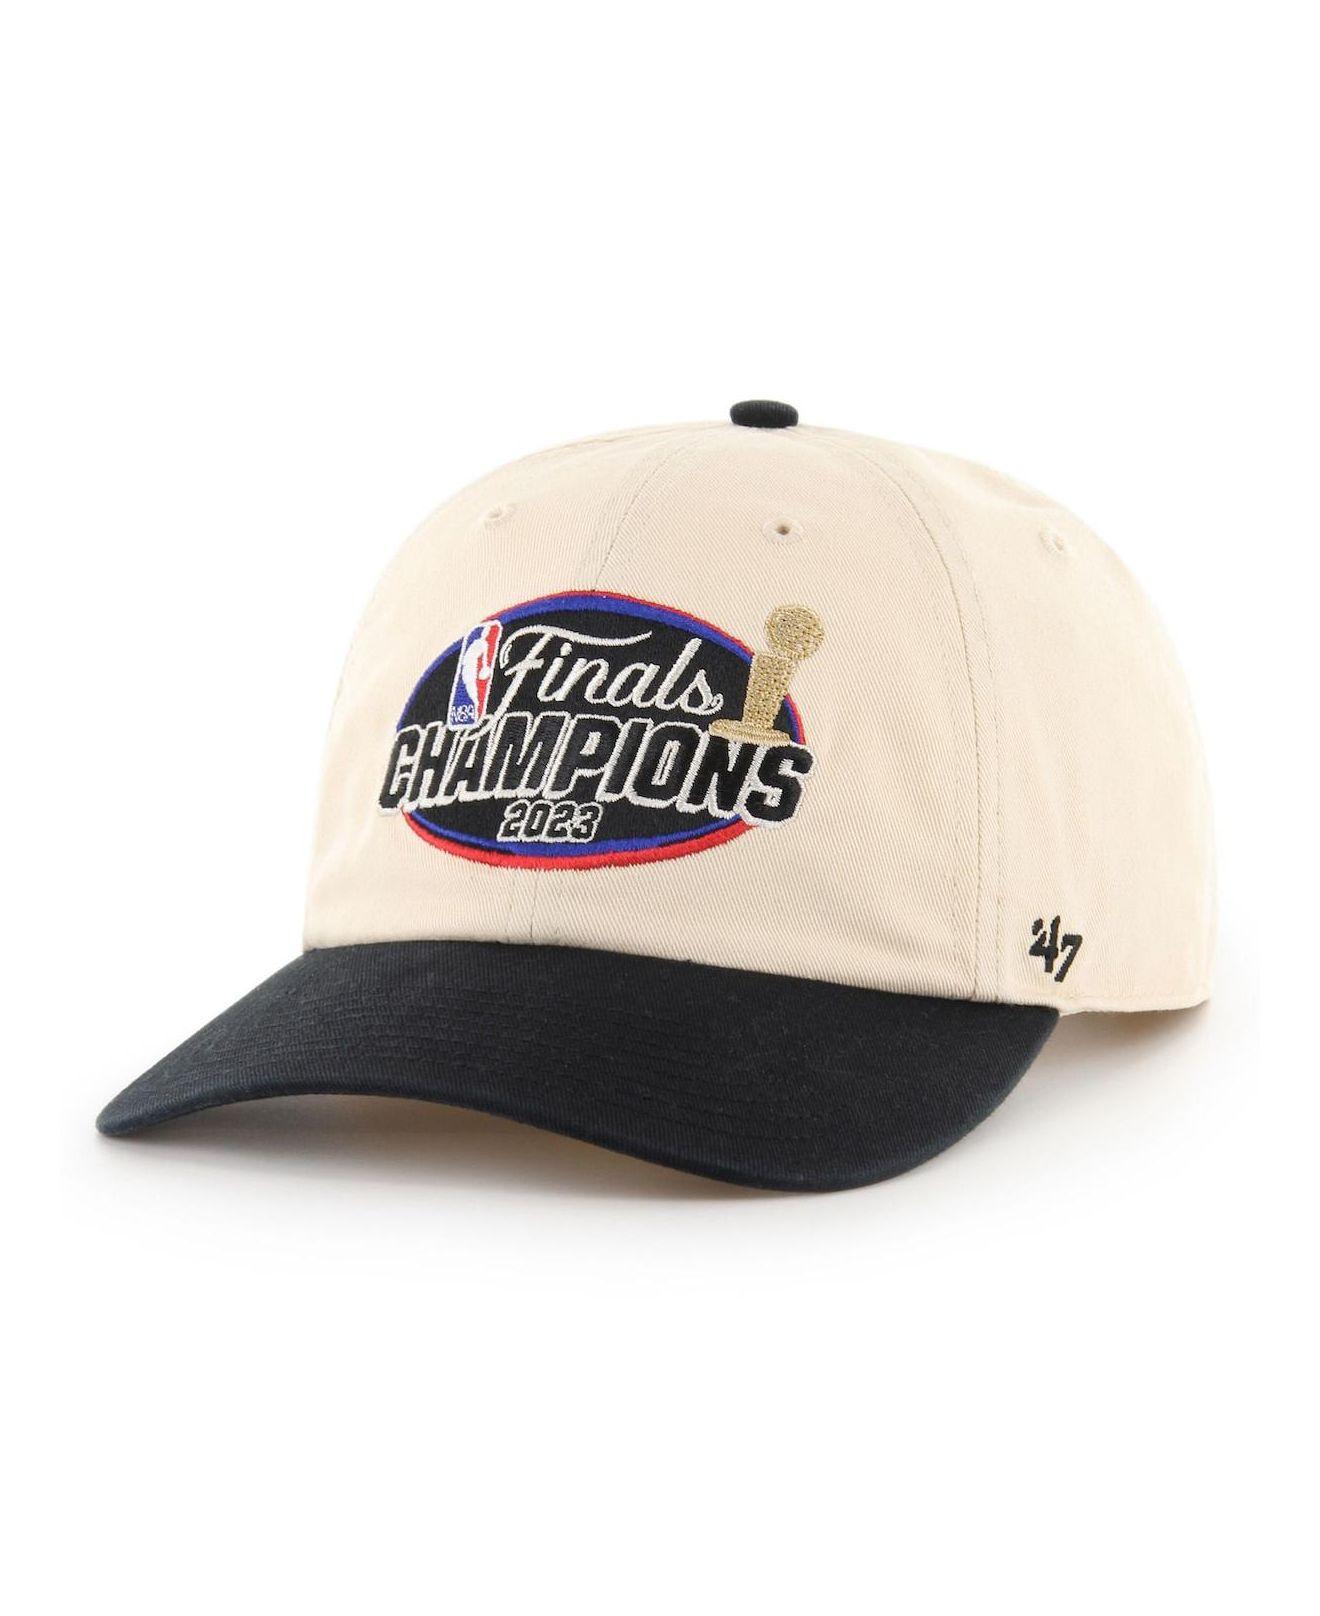 champions hat nuggets